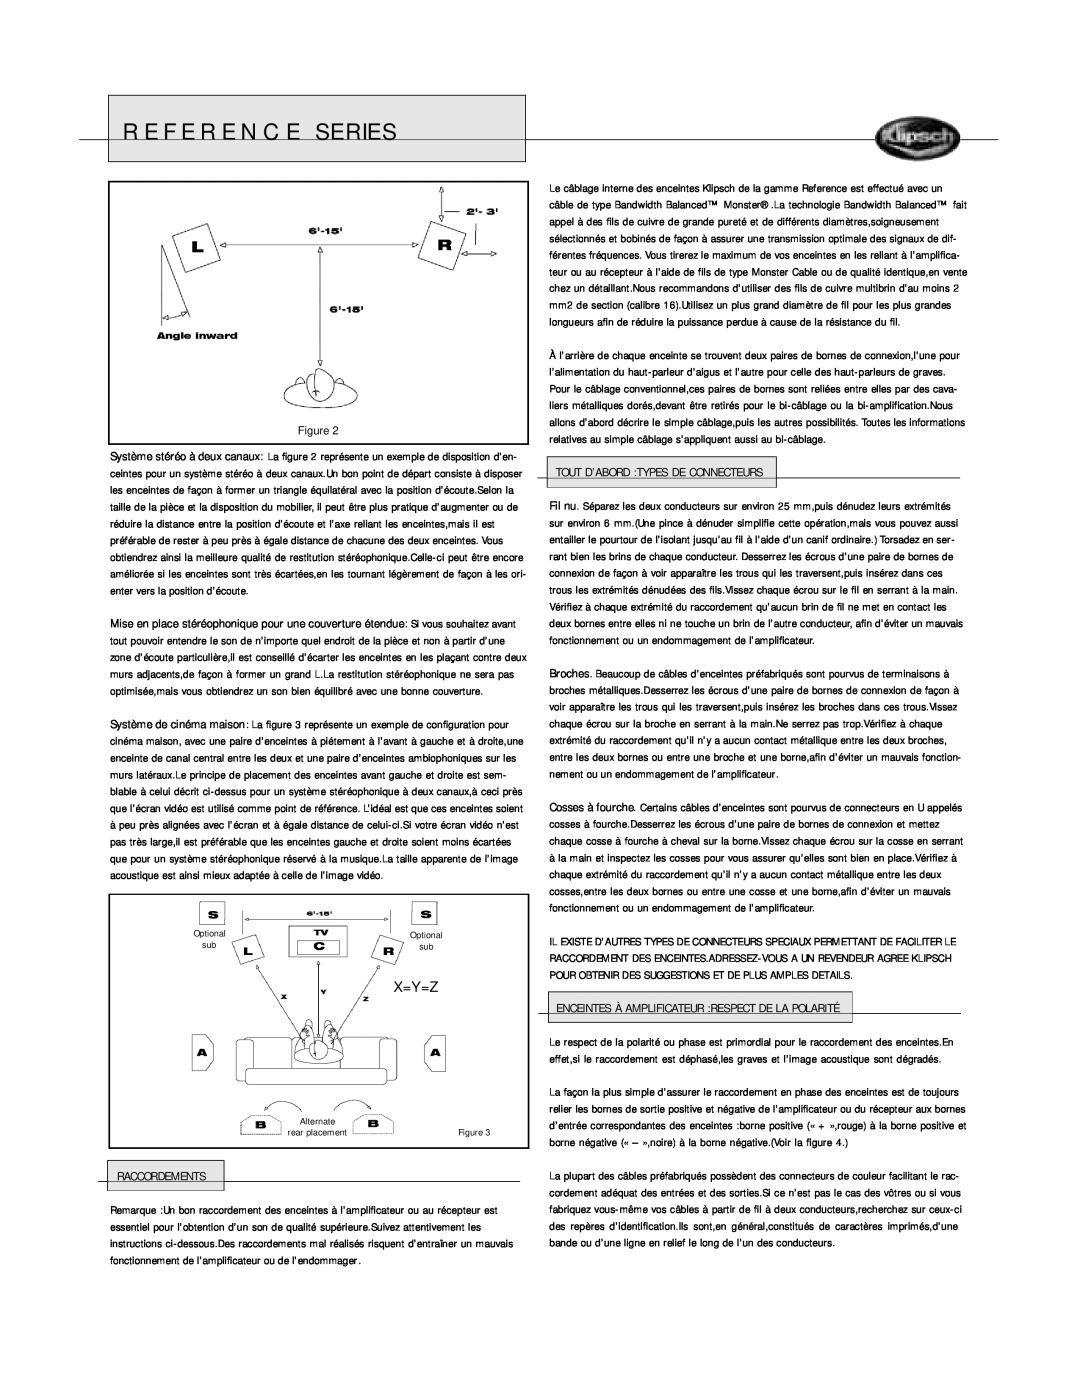 Klipsch Floorstanding Speaker owner manual X=Y=Z, Reference Series, Raccordements, Tout D’Abord Types De Connecteurs 